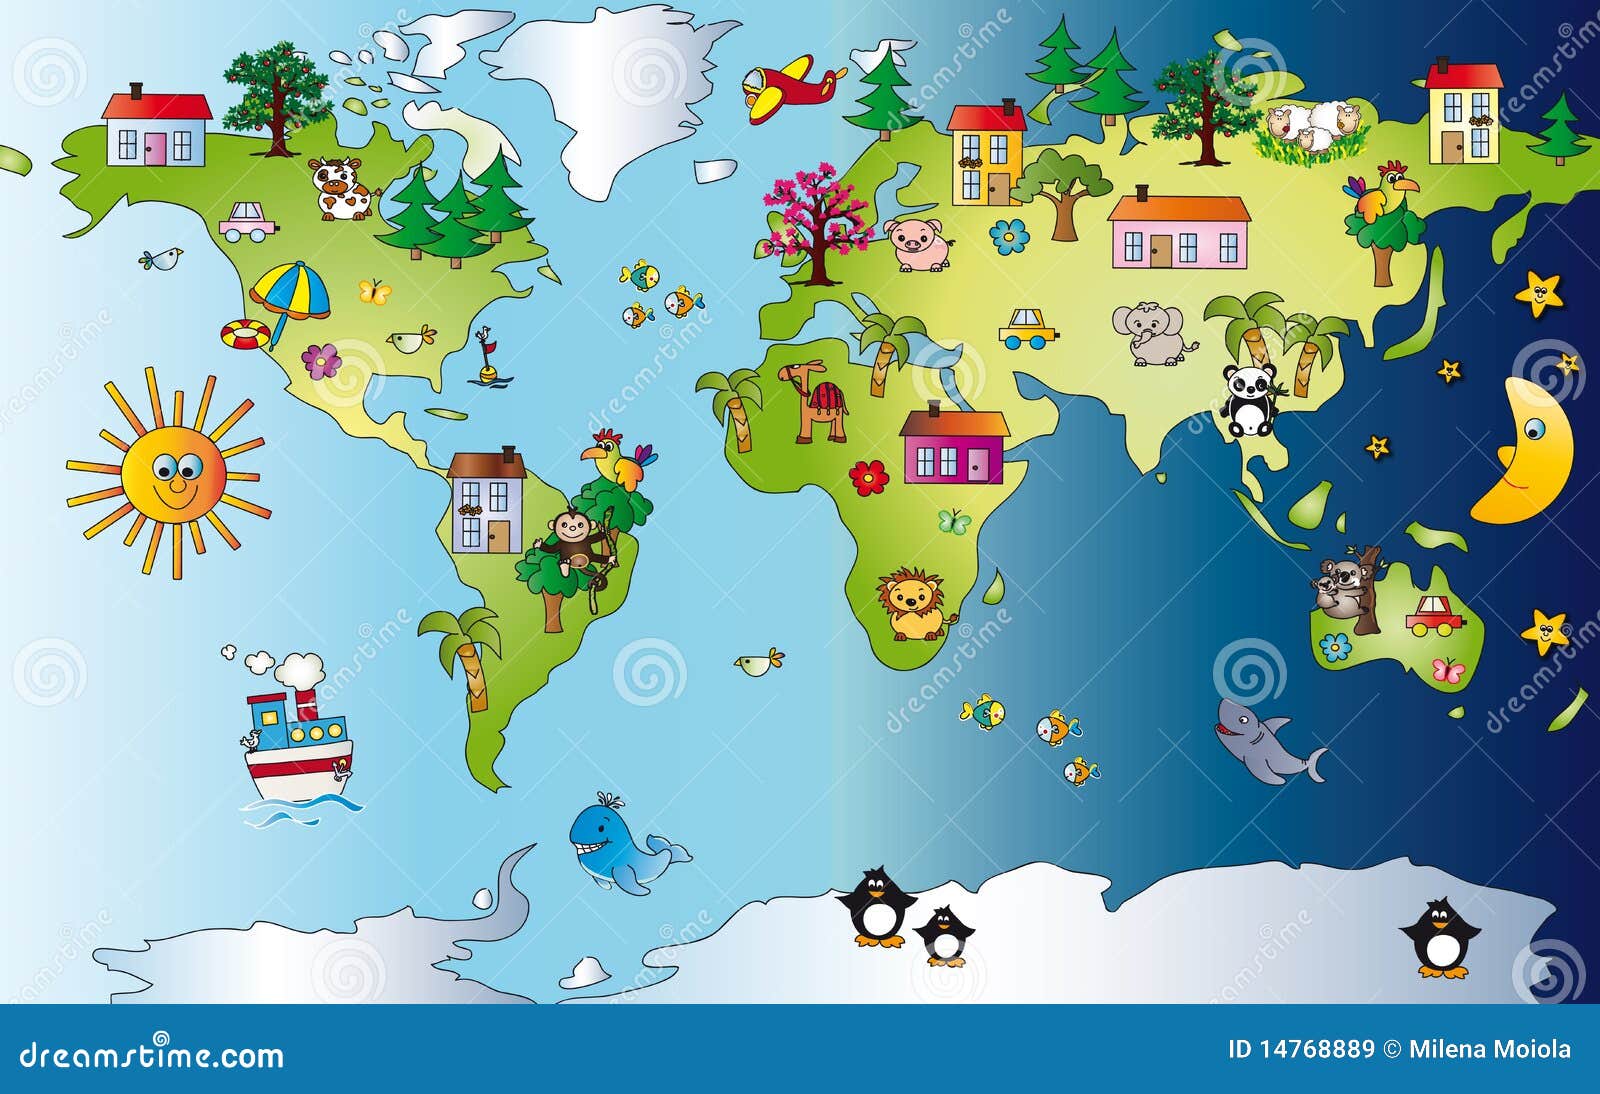 World Map Royalty Free Stock Images - Image: 14768889